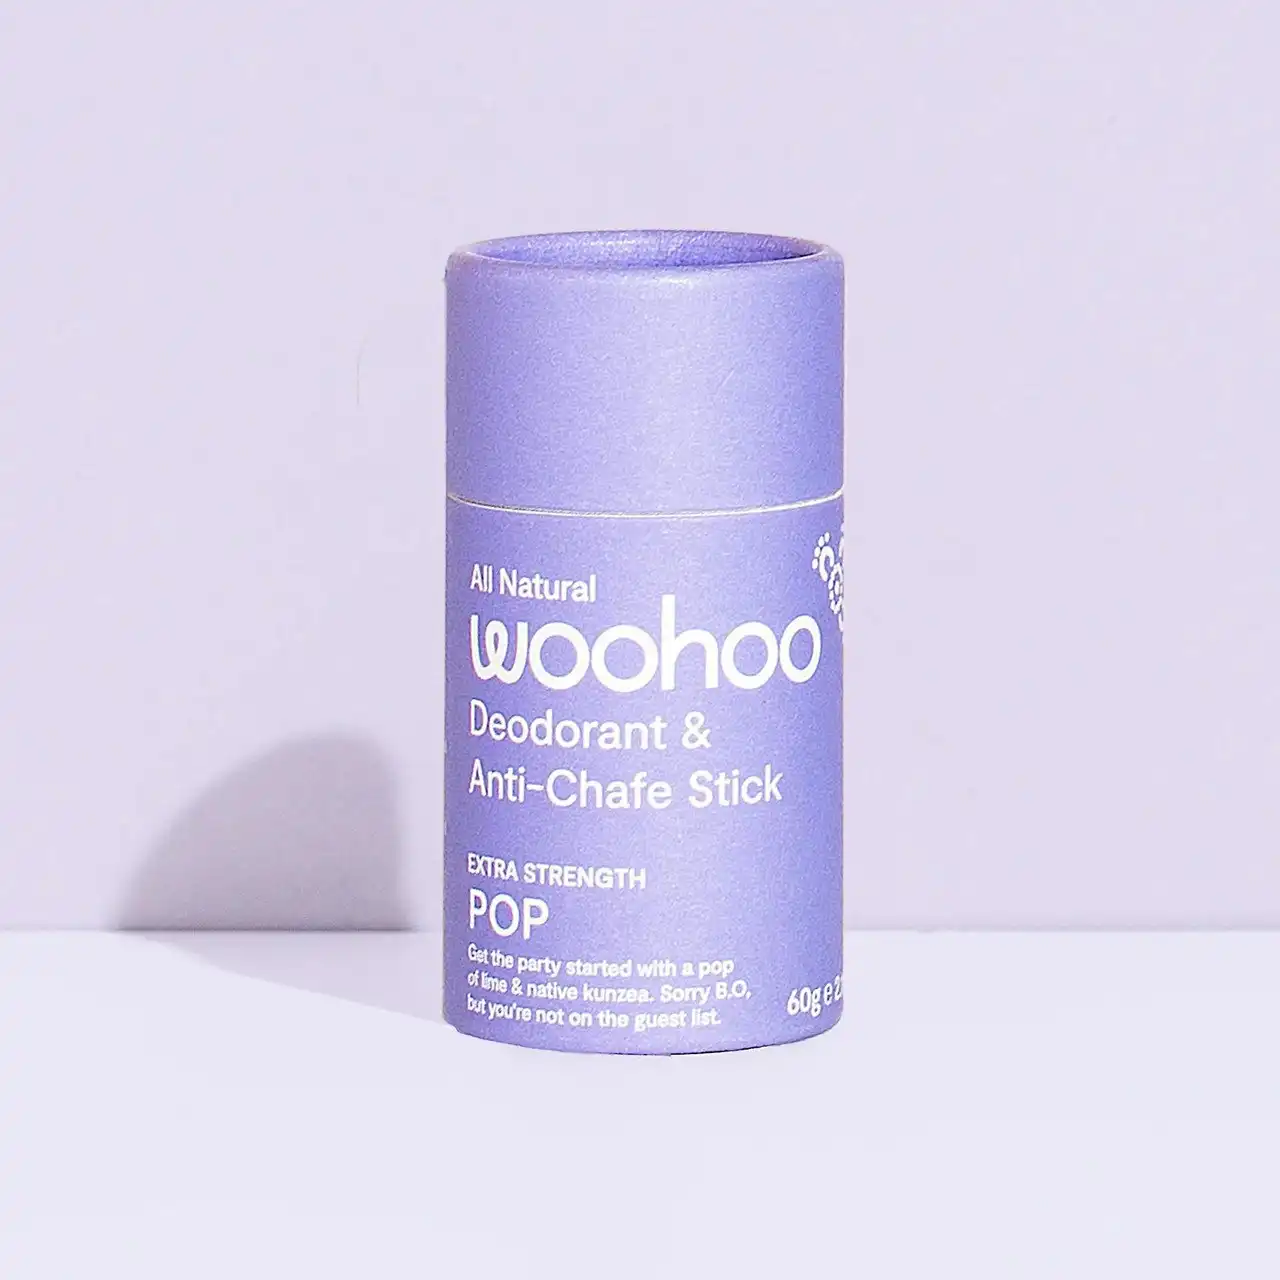 Woohoo Natural Deodorant & Anti-Chafe Stick Pop 60g